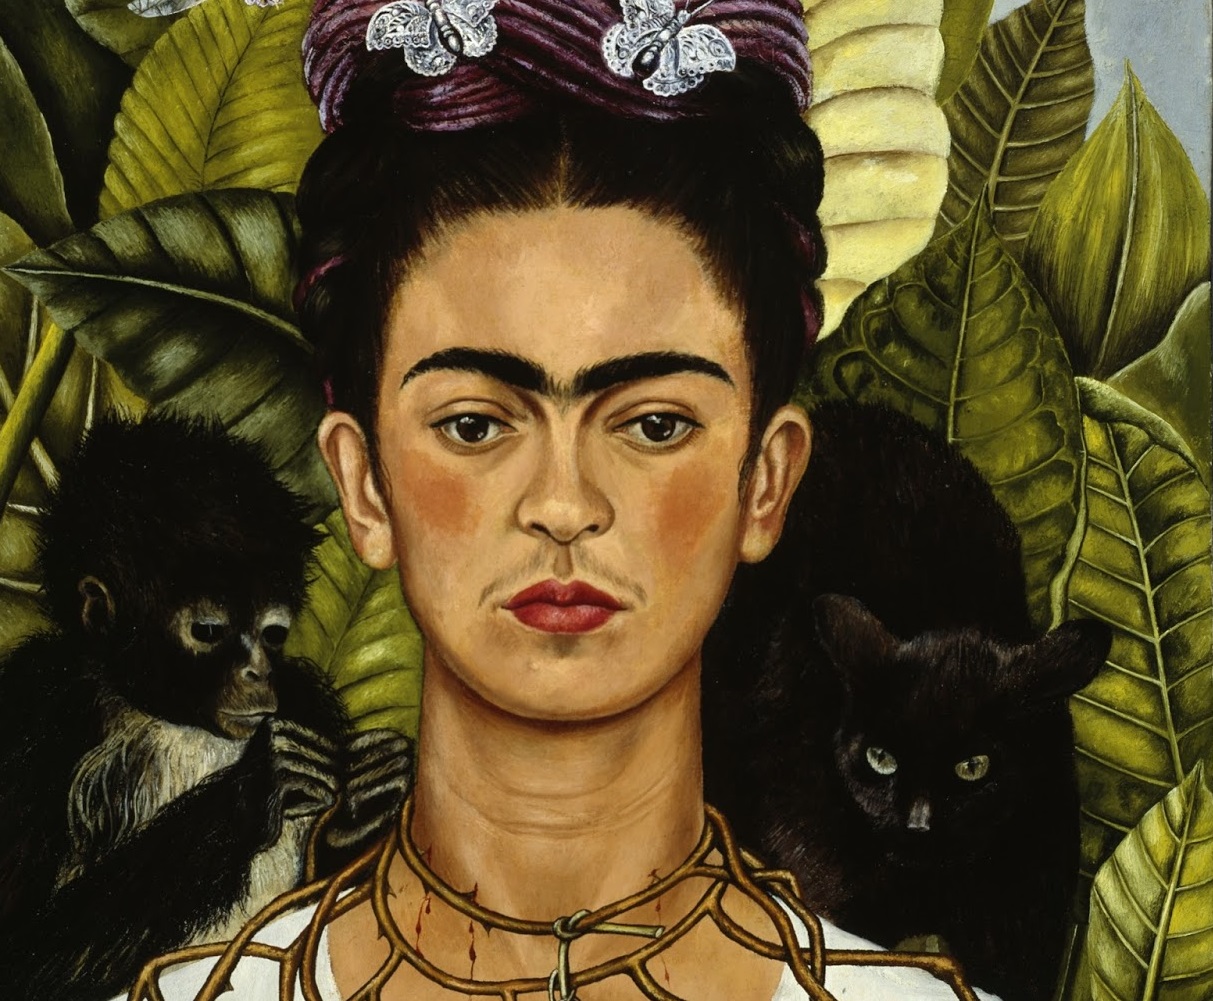 Da van Gogh e Frida Kahlo, fino a Banksy, le mostre in arrivo in Italia a ottobre